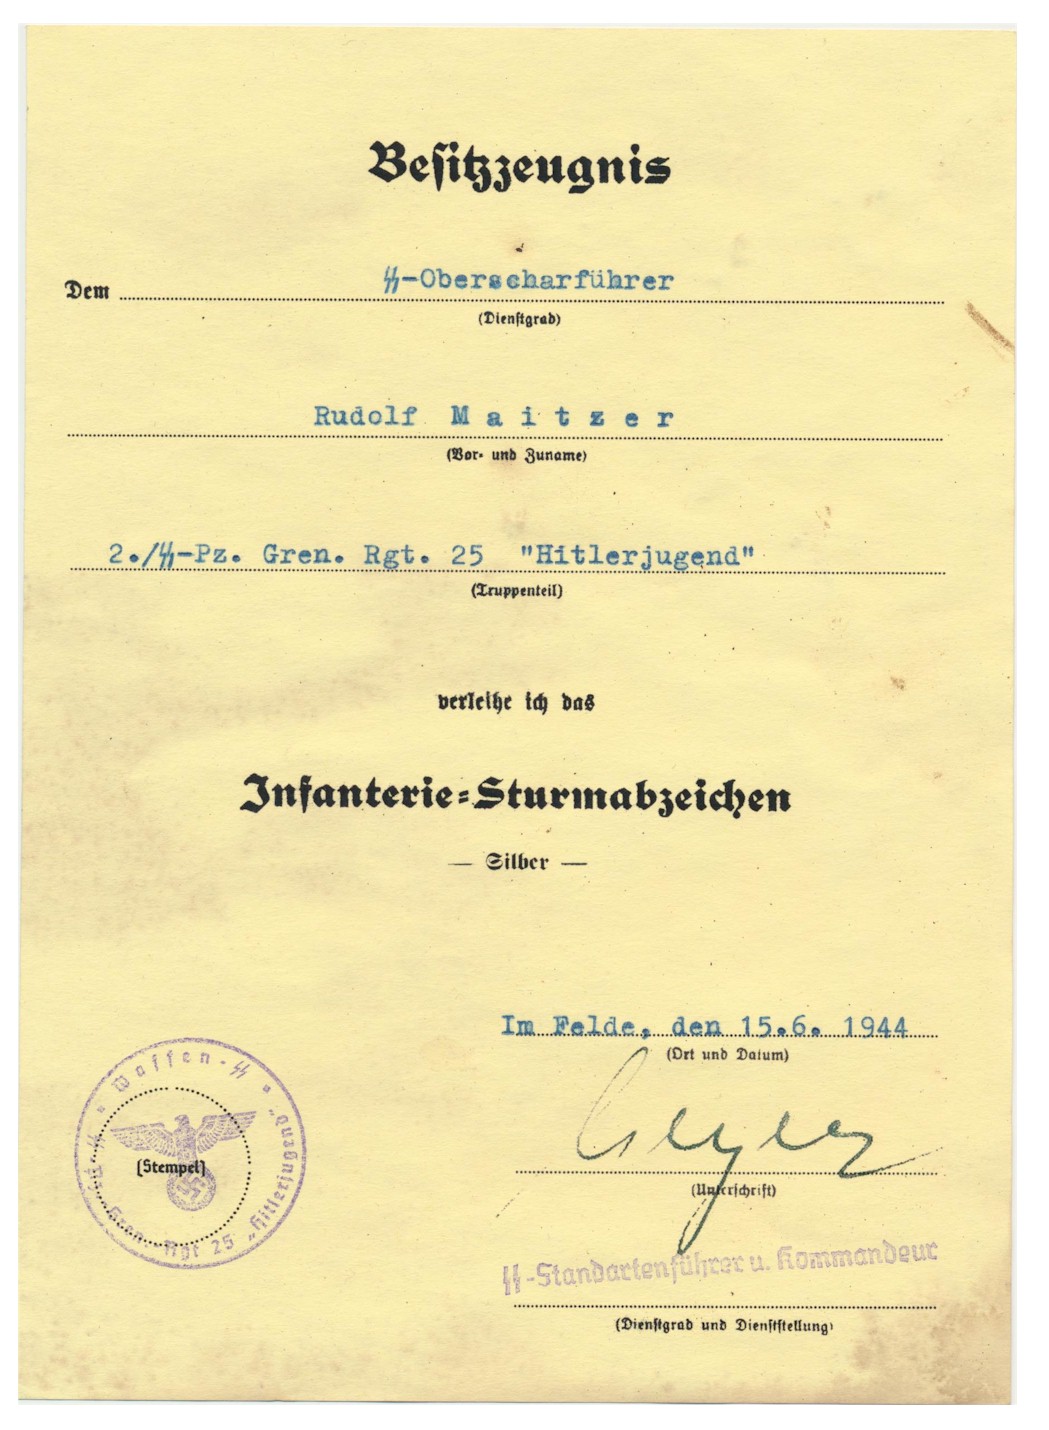 GERMAN WW2 INFANTRY ASSAULT SILVER BADGE AWARD DOCUMENT FOR RUDOLF MAITZER